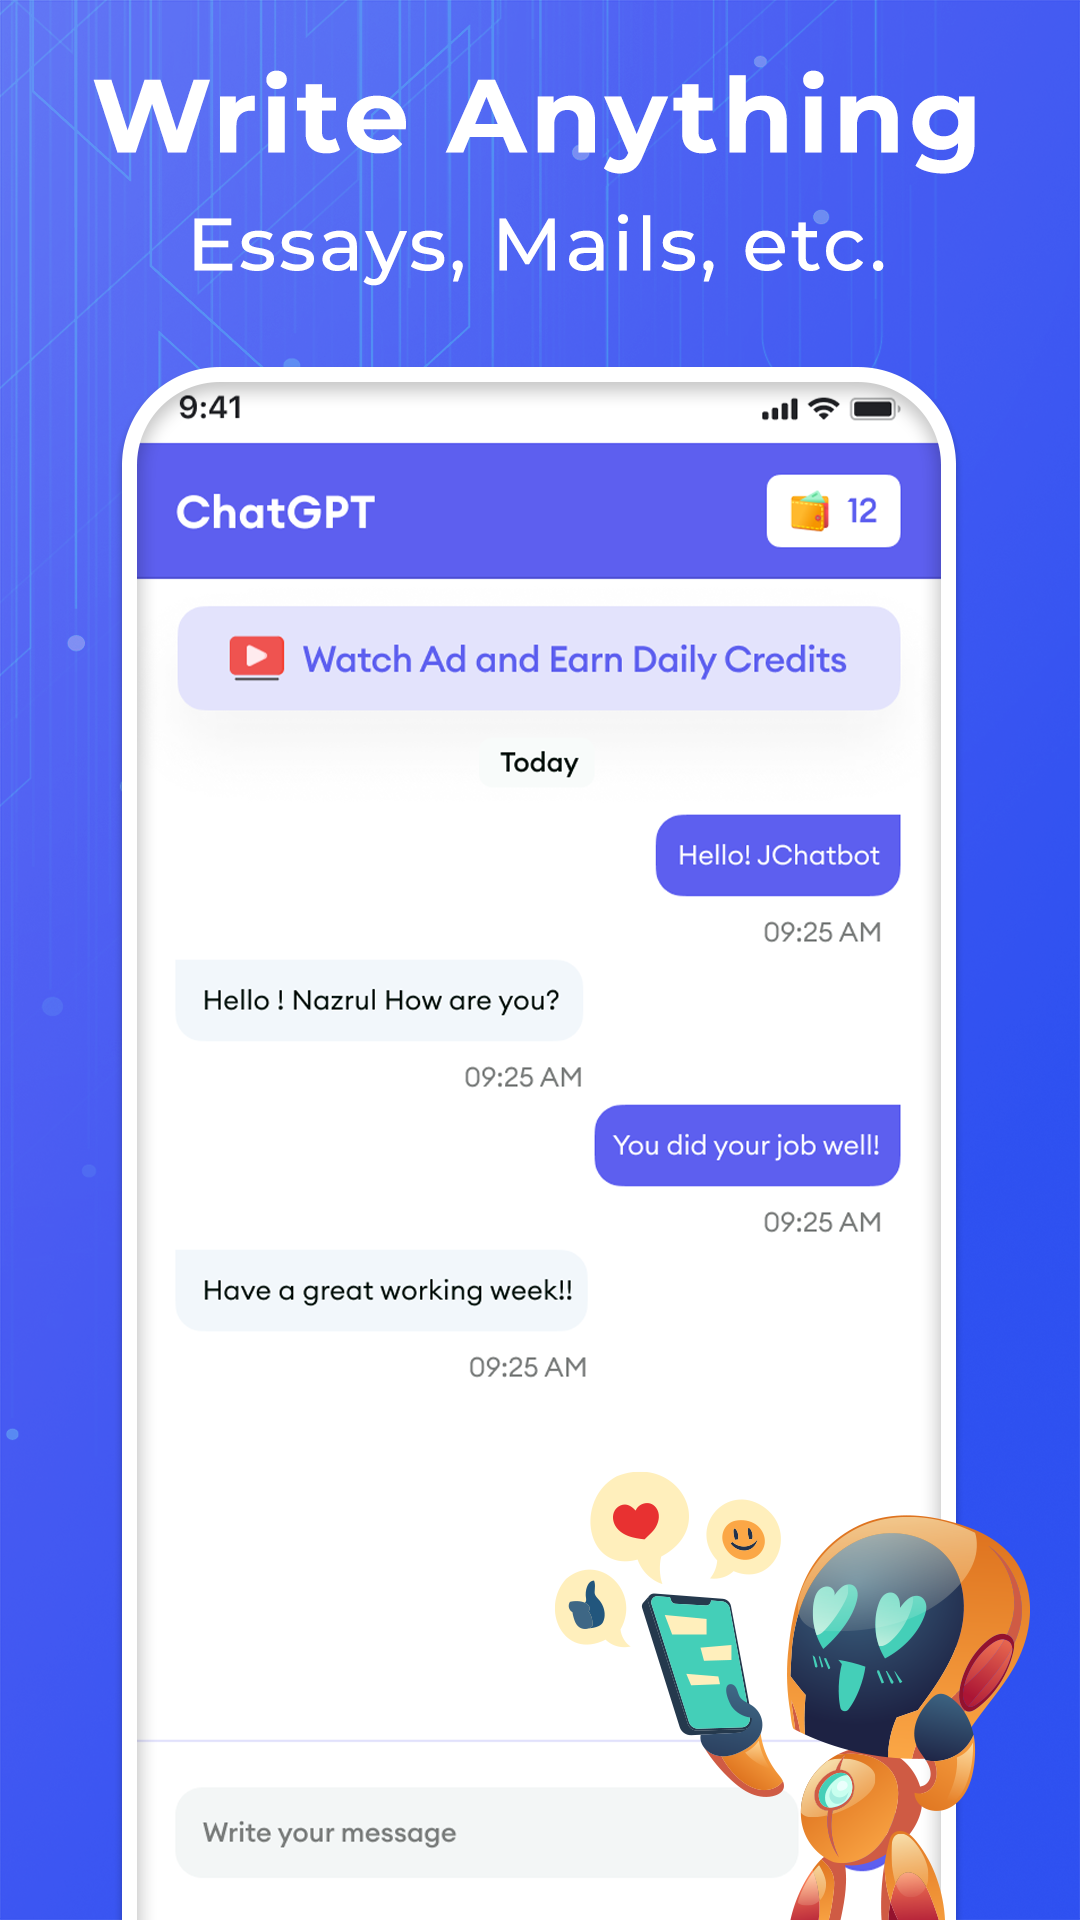 AI Smart Chat Bot & Assistant